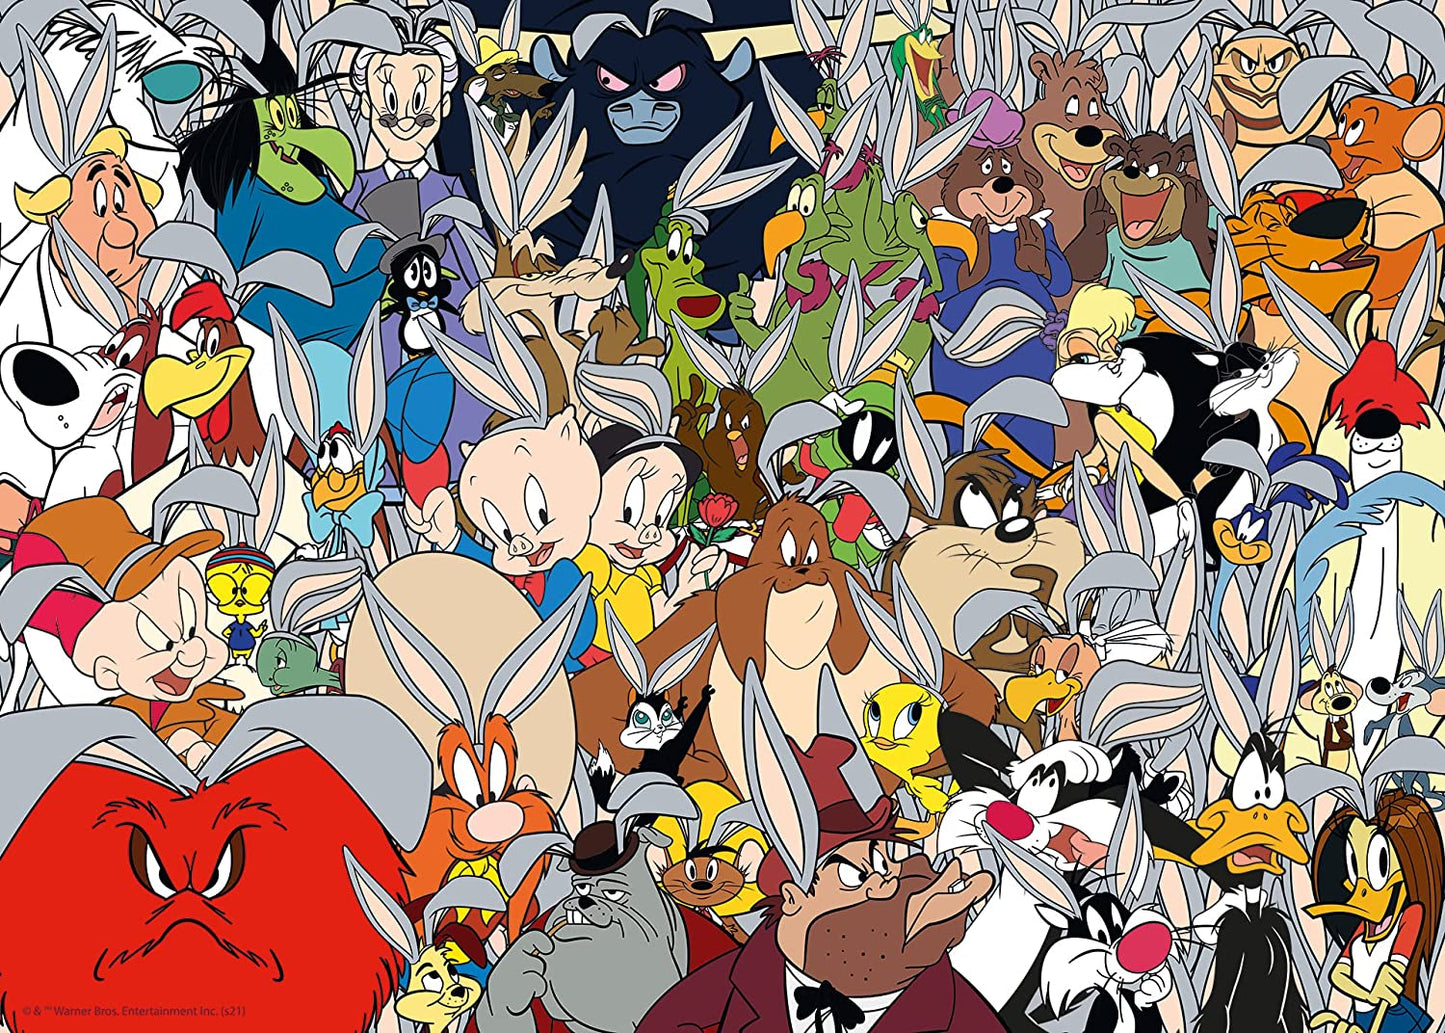 Ravensburger - Challenge - Looney Tunes - 1000 Piece Jigsaw Puzzle